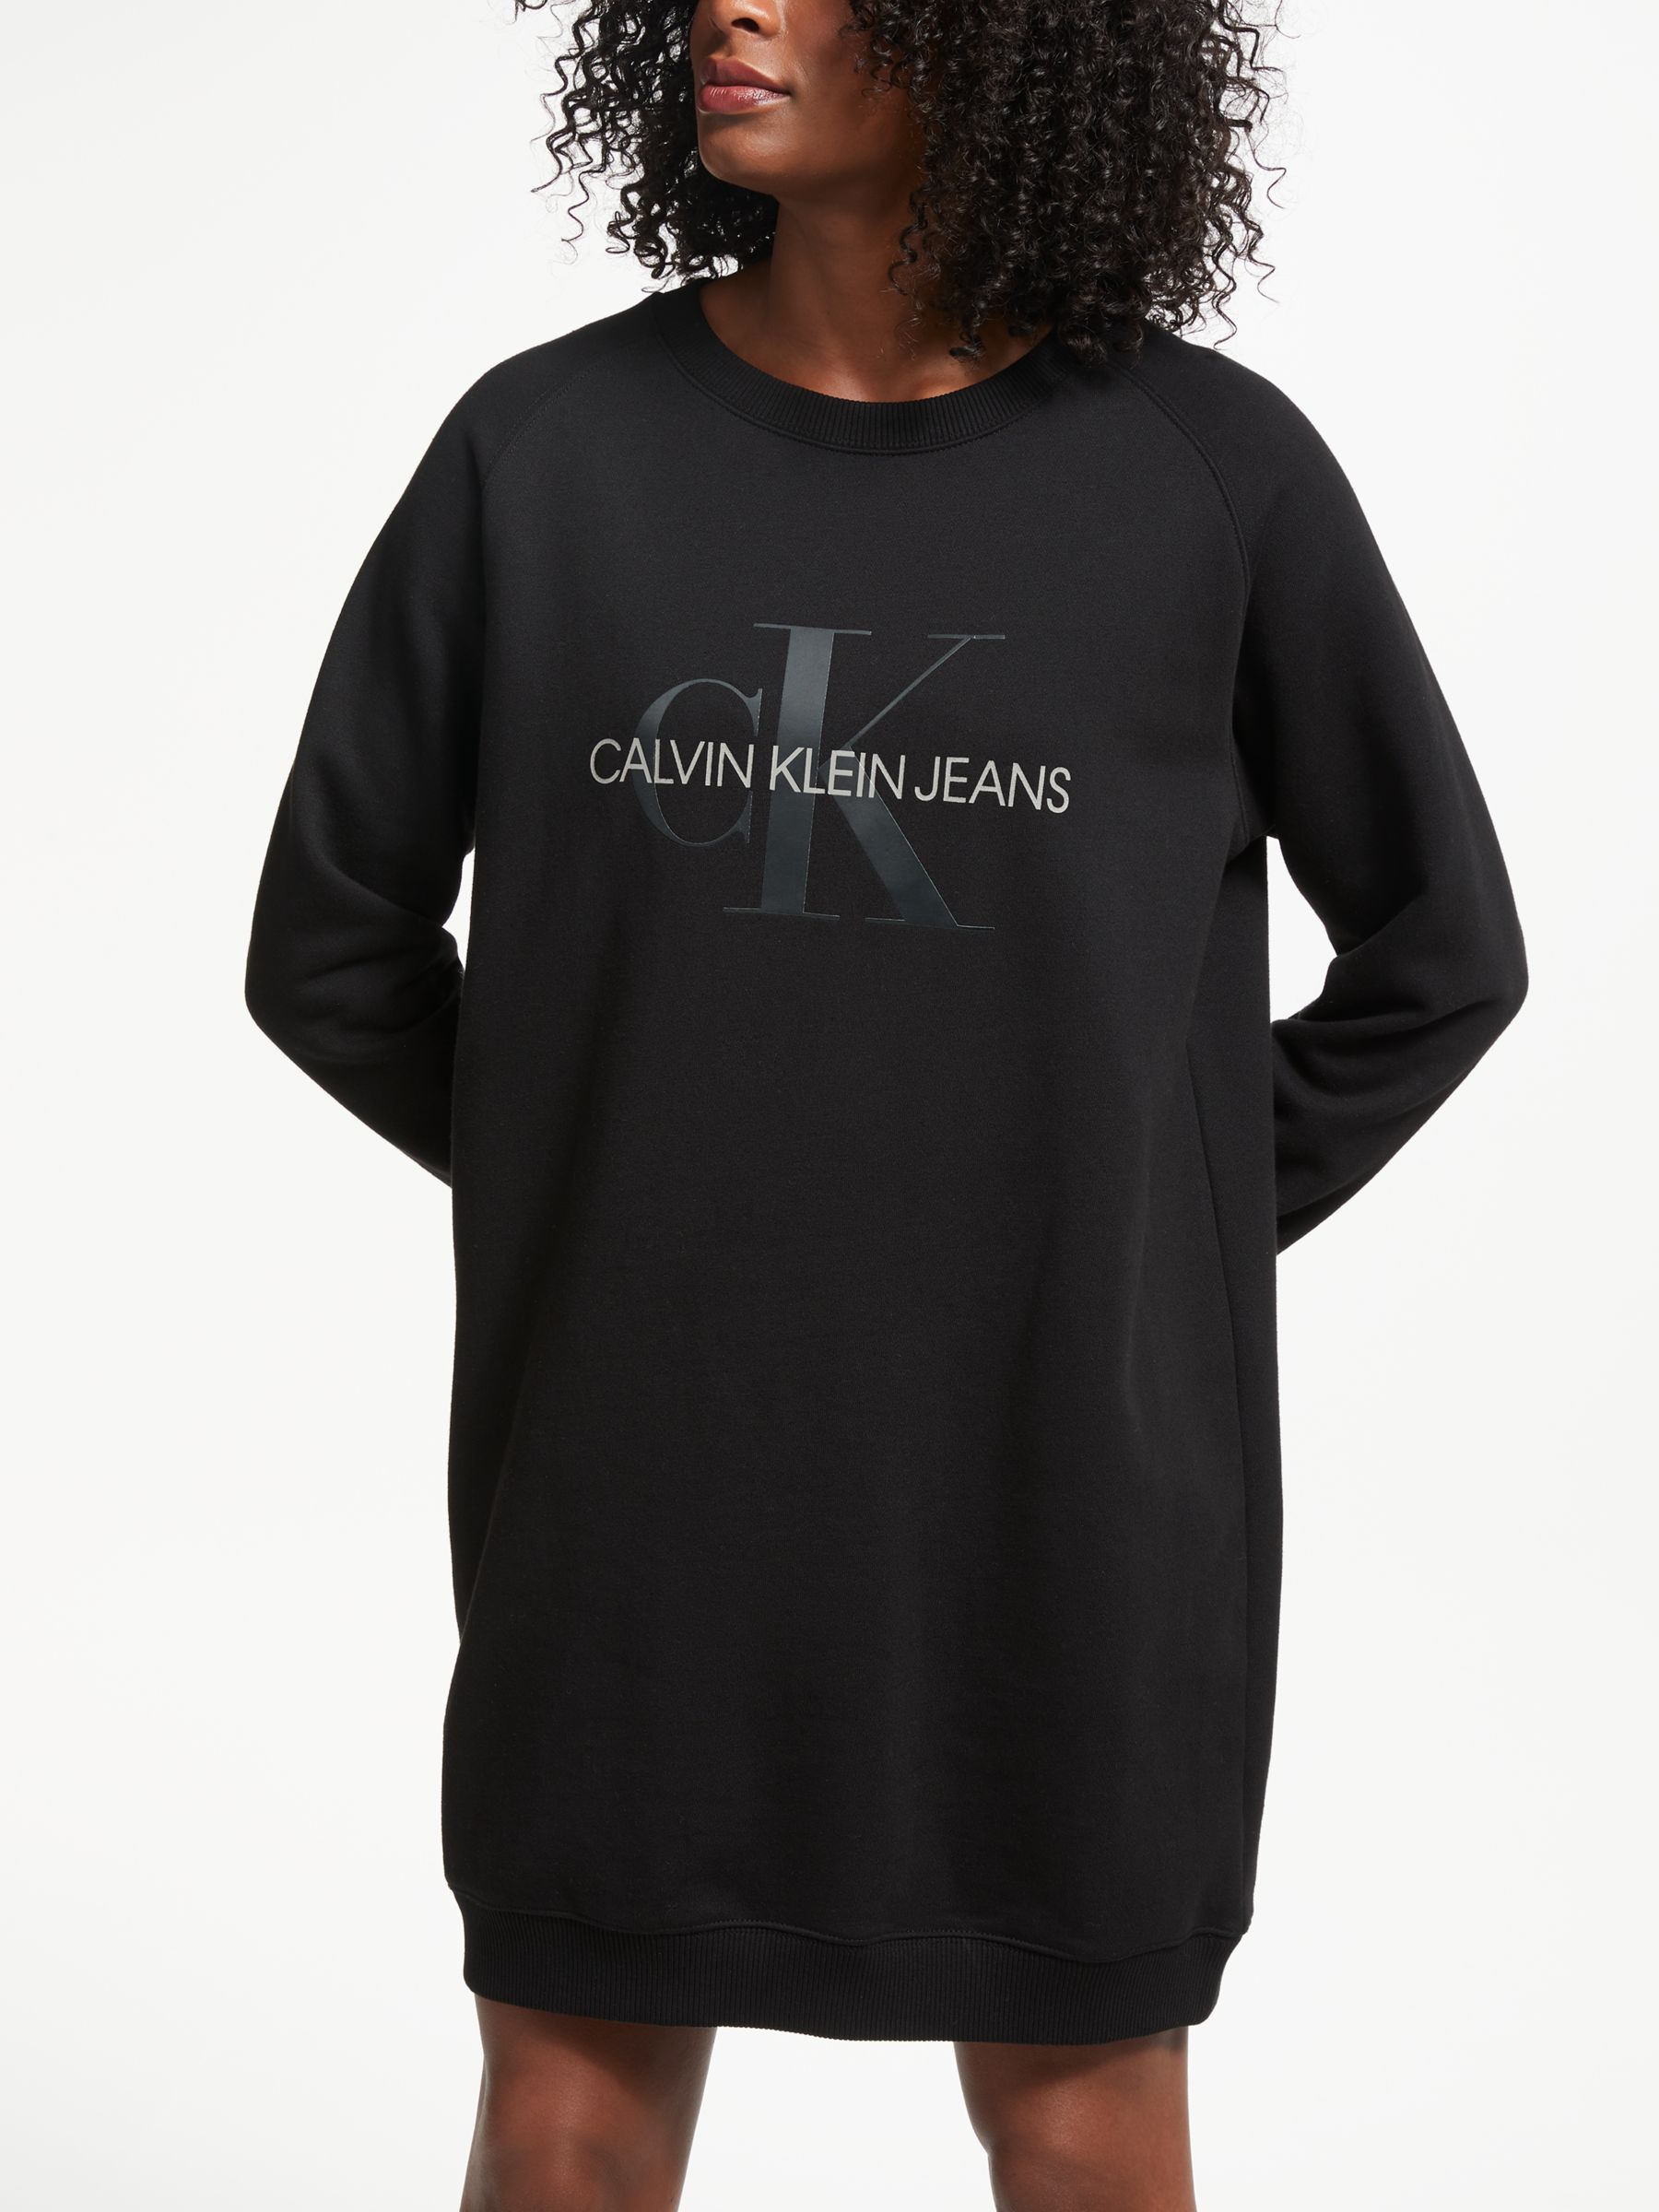 calvin klein logo sweatshirt dress